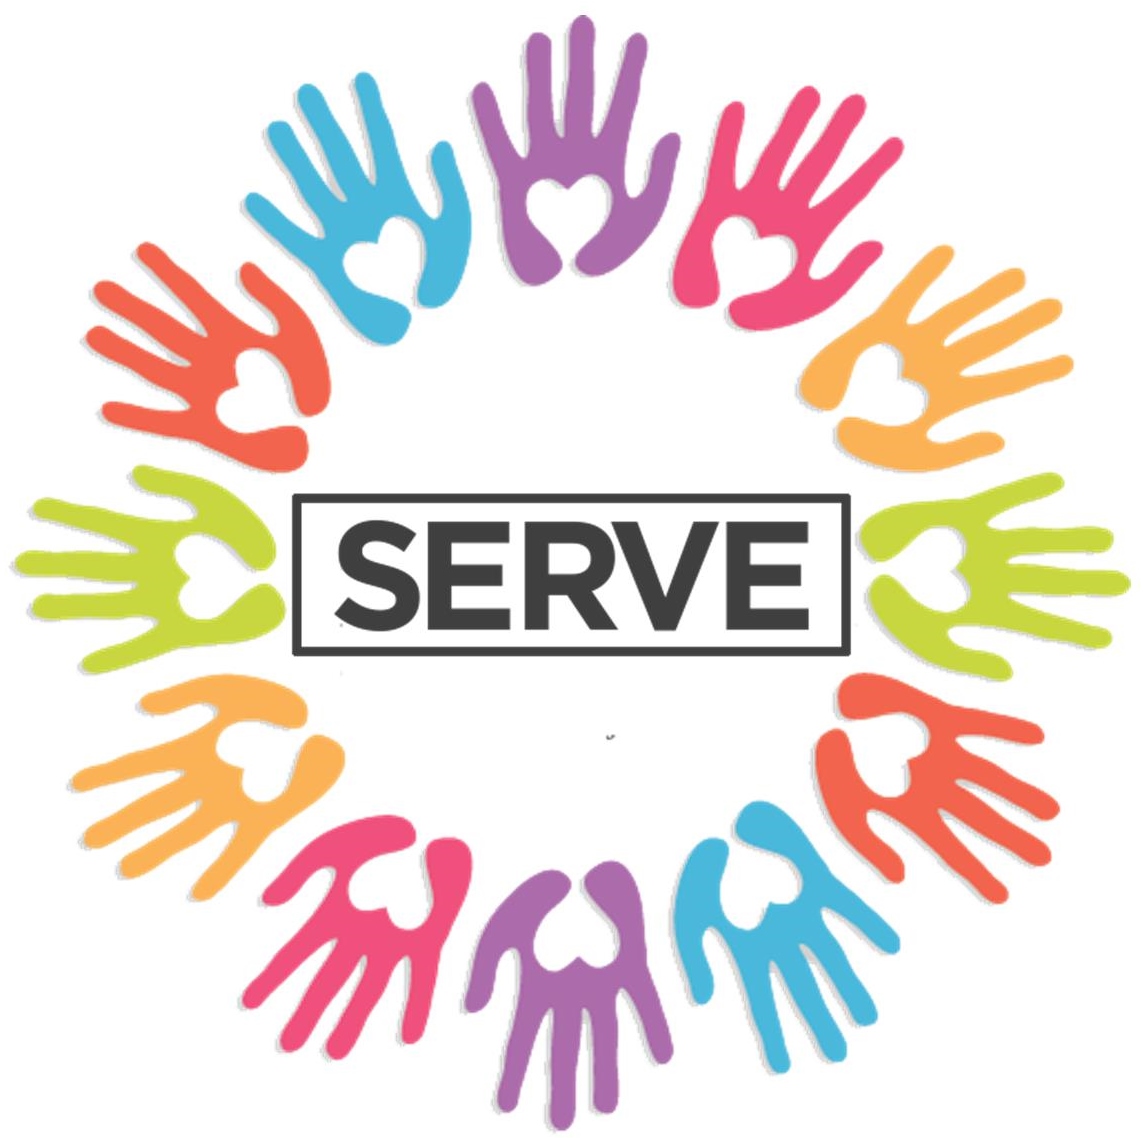 “Serve, pt. 2: Do Good” - By Rev. Troy Benton